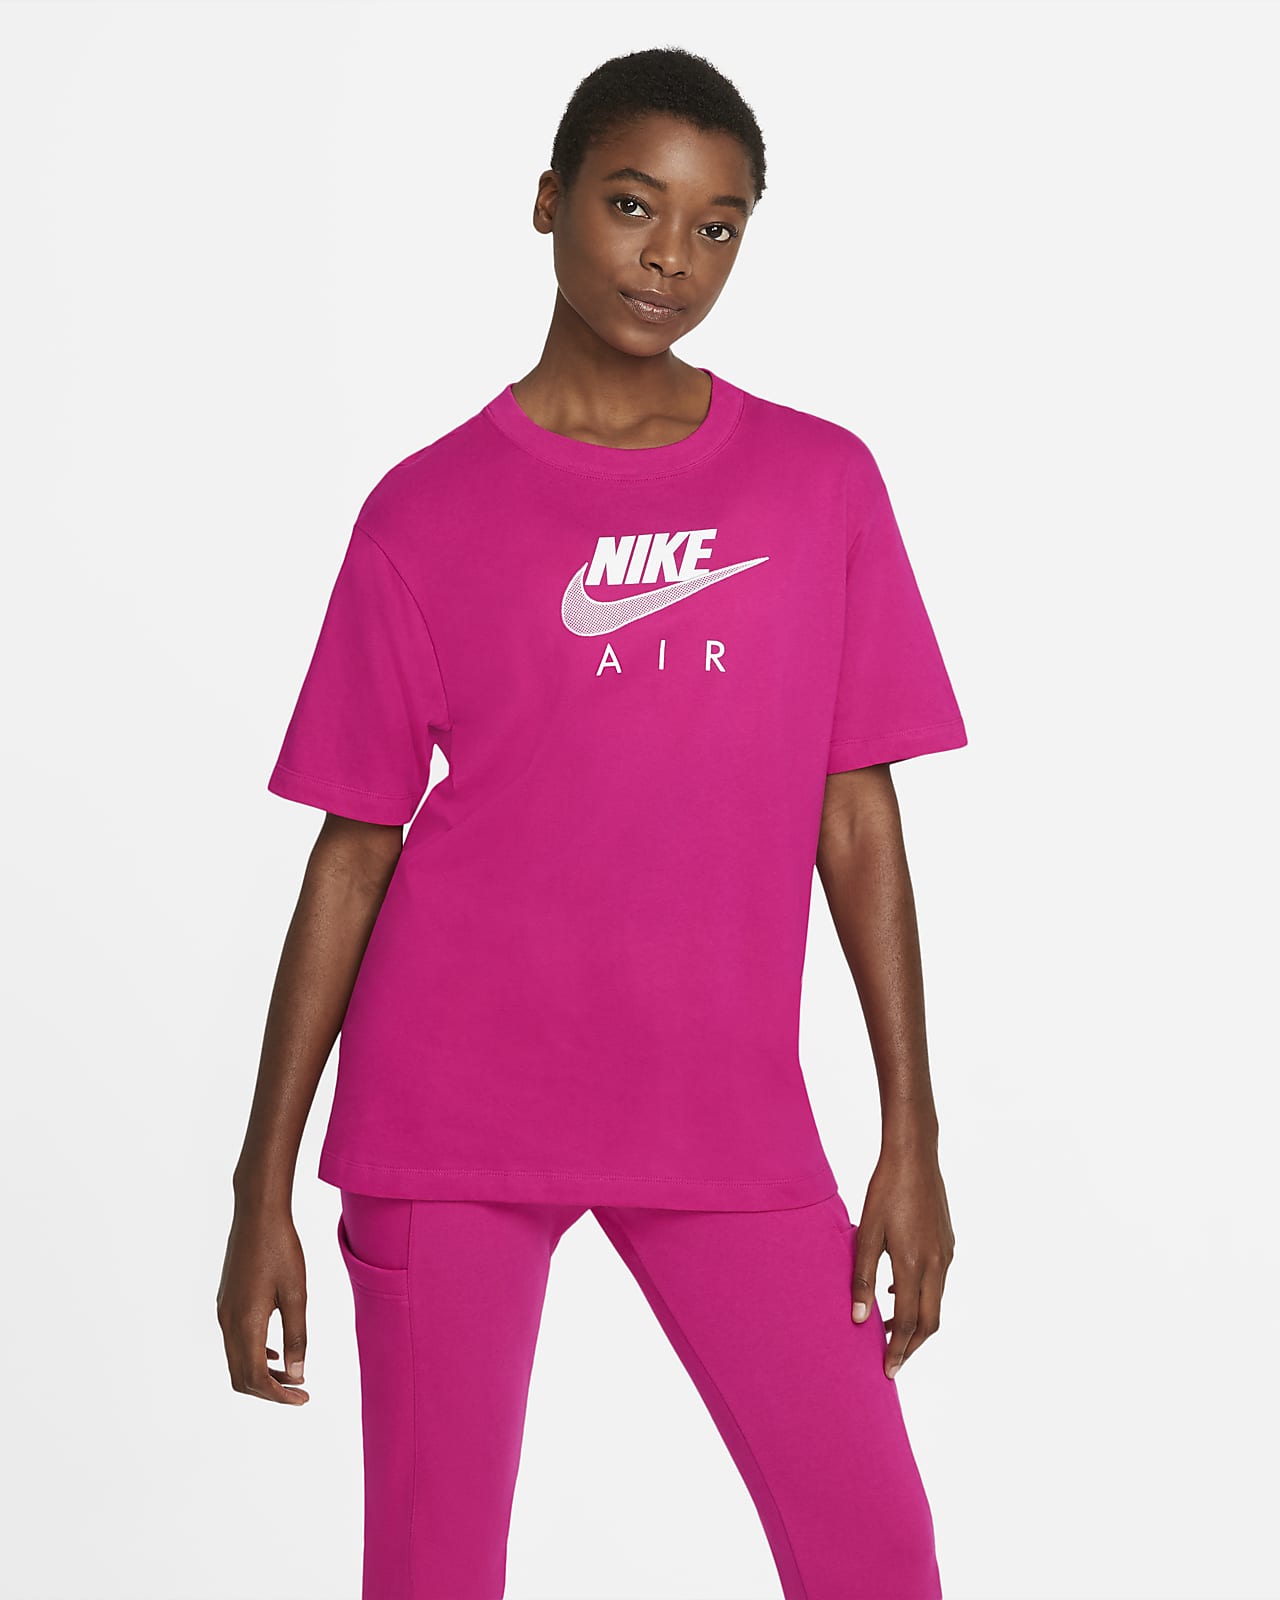 nike boyfriend t shirt pink